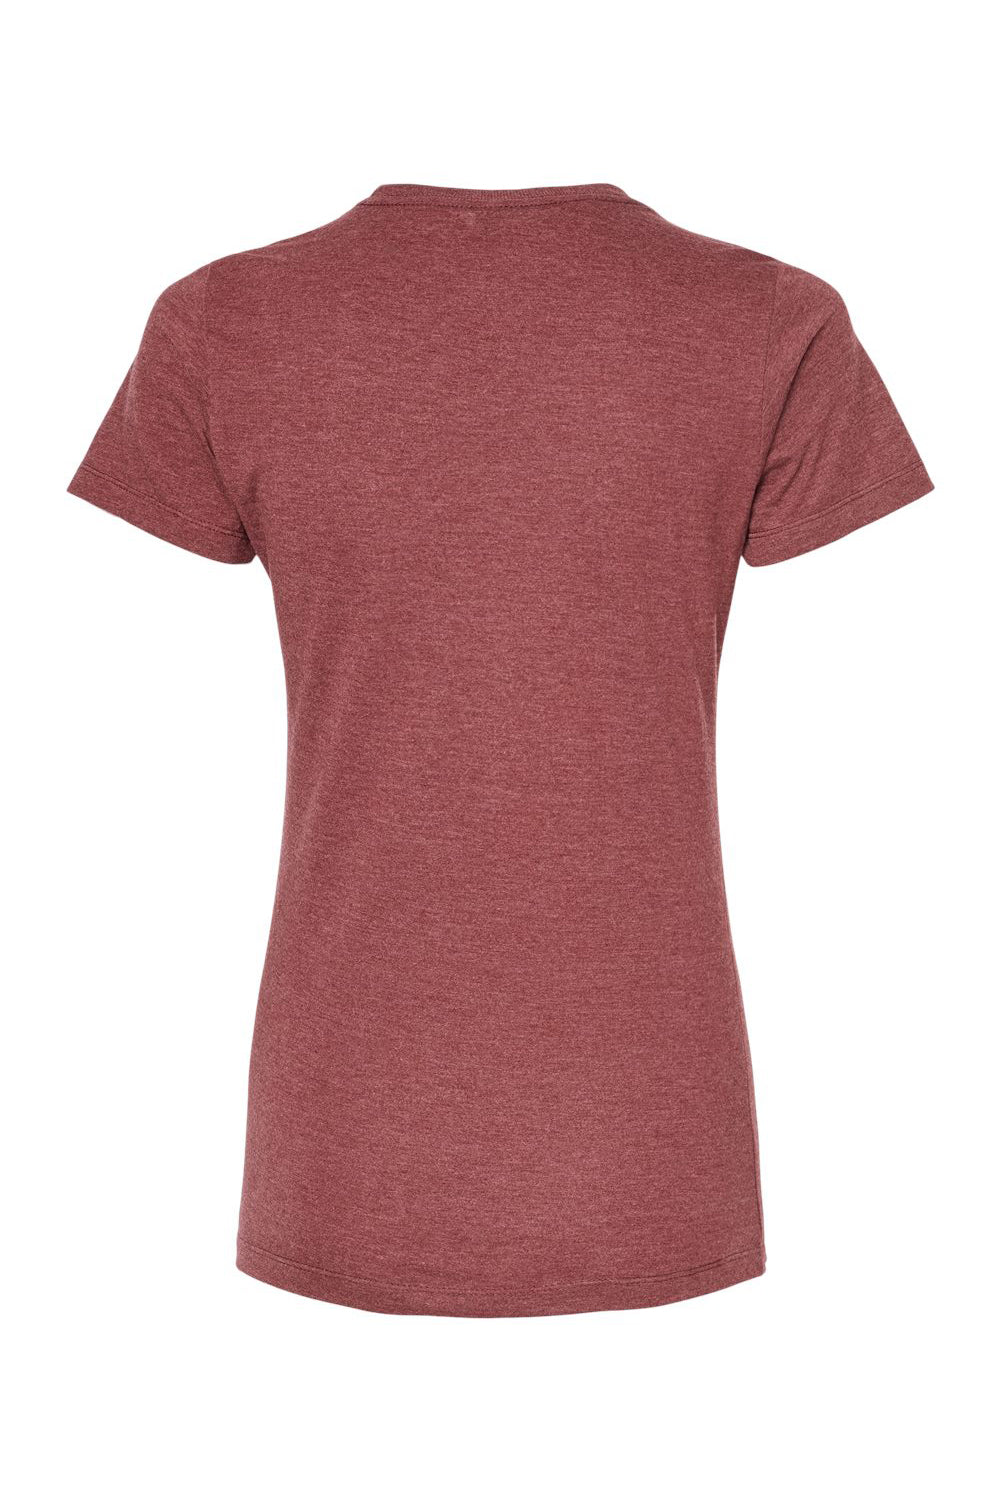 Tultex 542 Womens Premium Short Sleeve Crewneck T-Shirt Heather Burgundy Flat Back